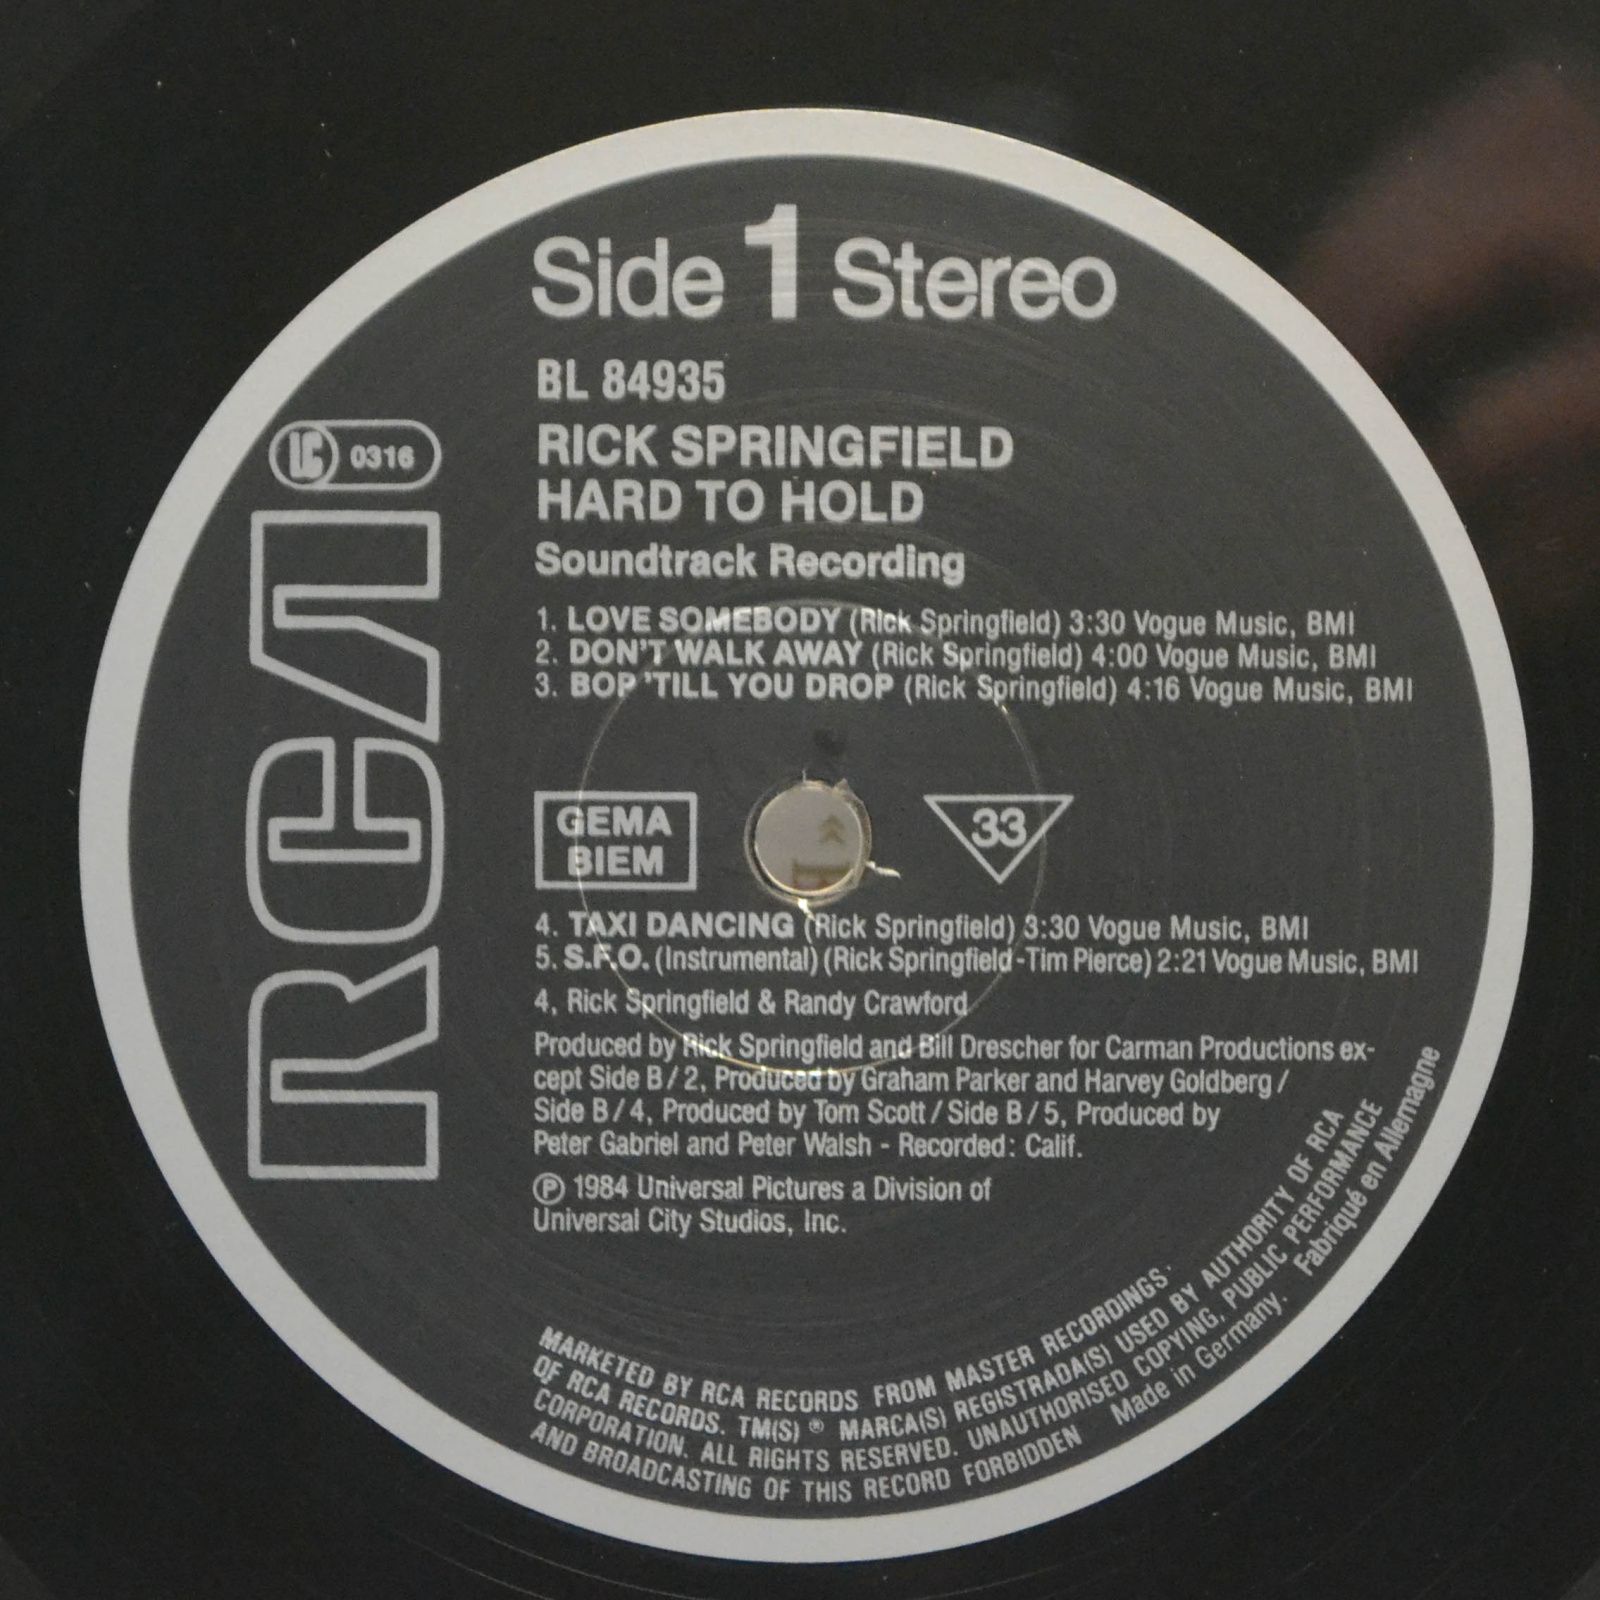 Rick Springfield — Hard To Hold - Soundtrack Recording, 1984